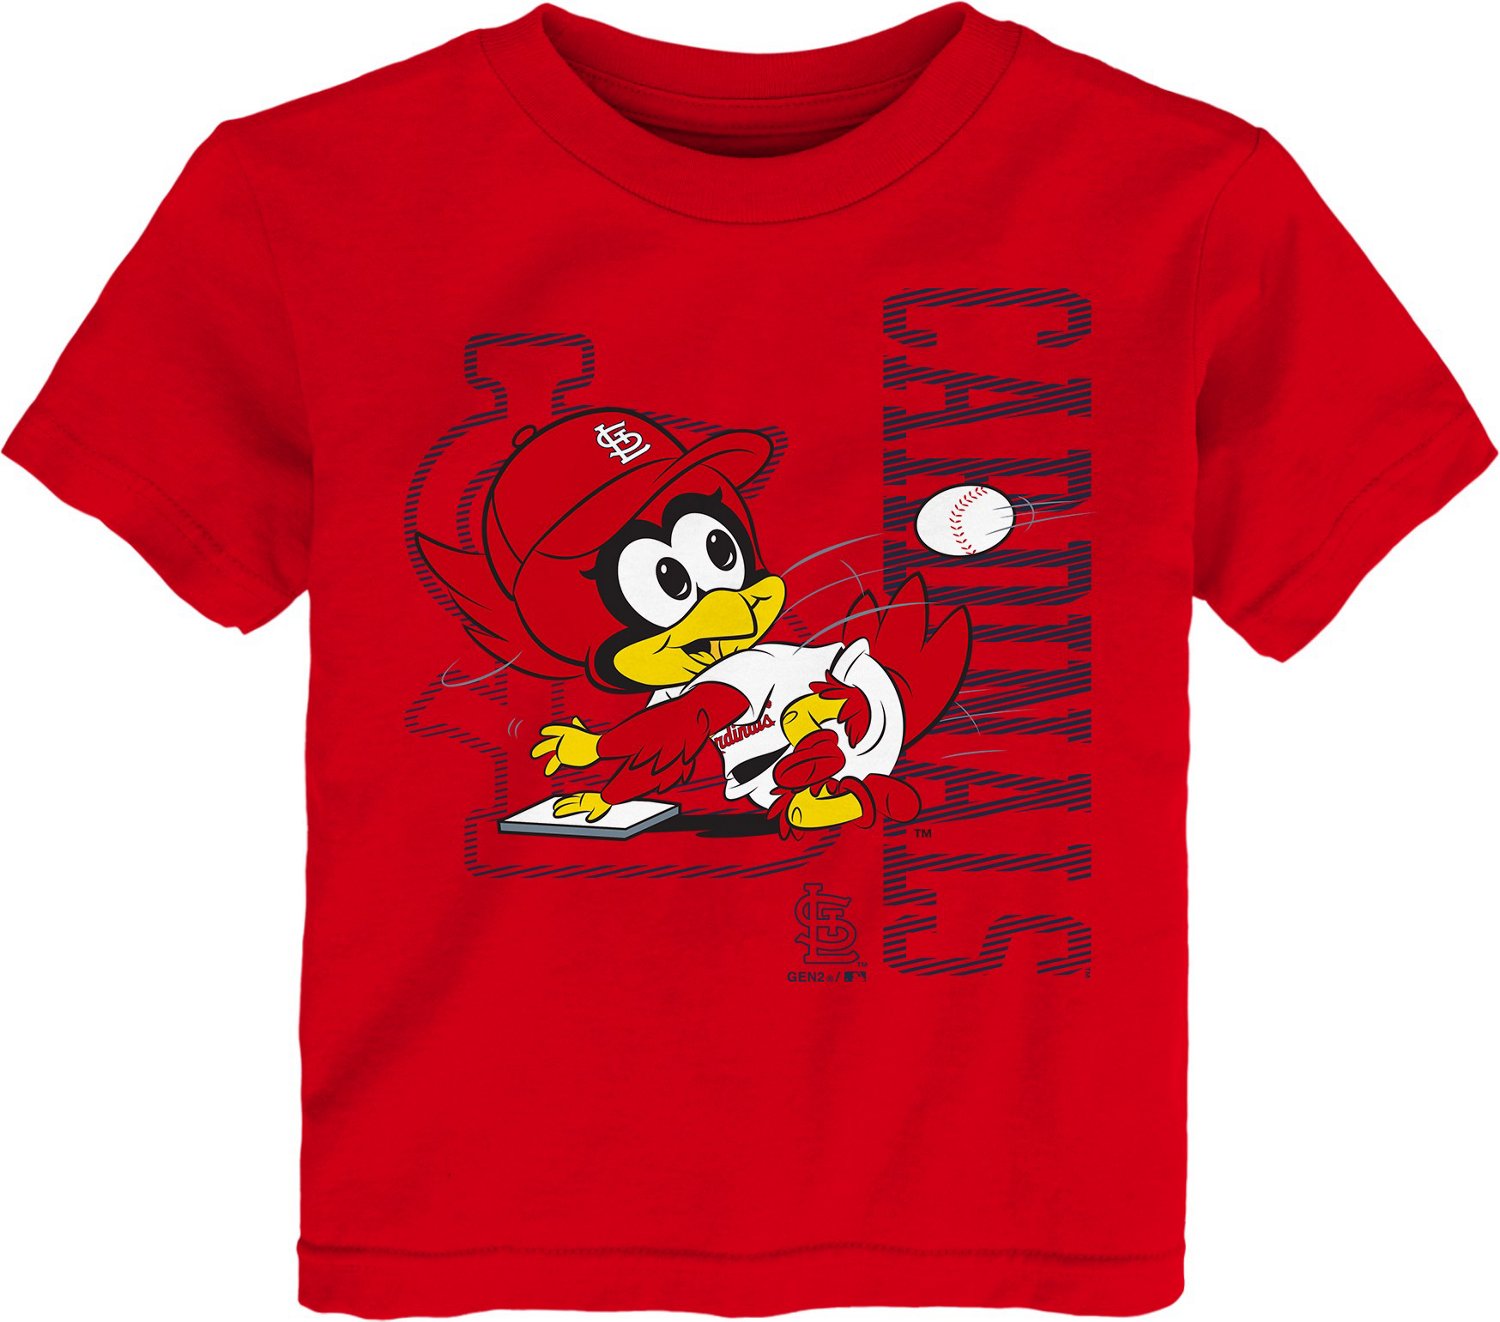 Outerstuff Toddler Boys' St. Louis Cardinals Baby Mascot 2.0 Graphic T-shirt